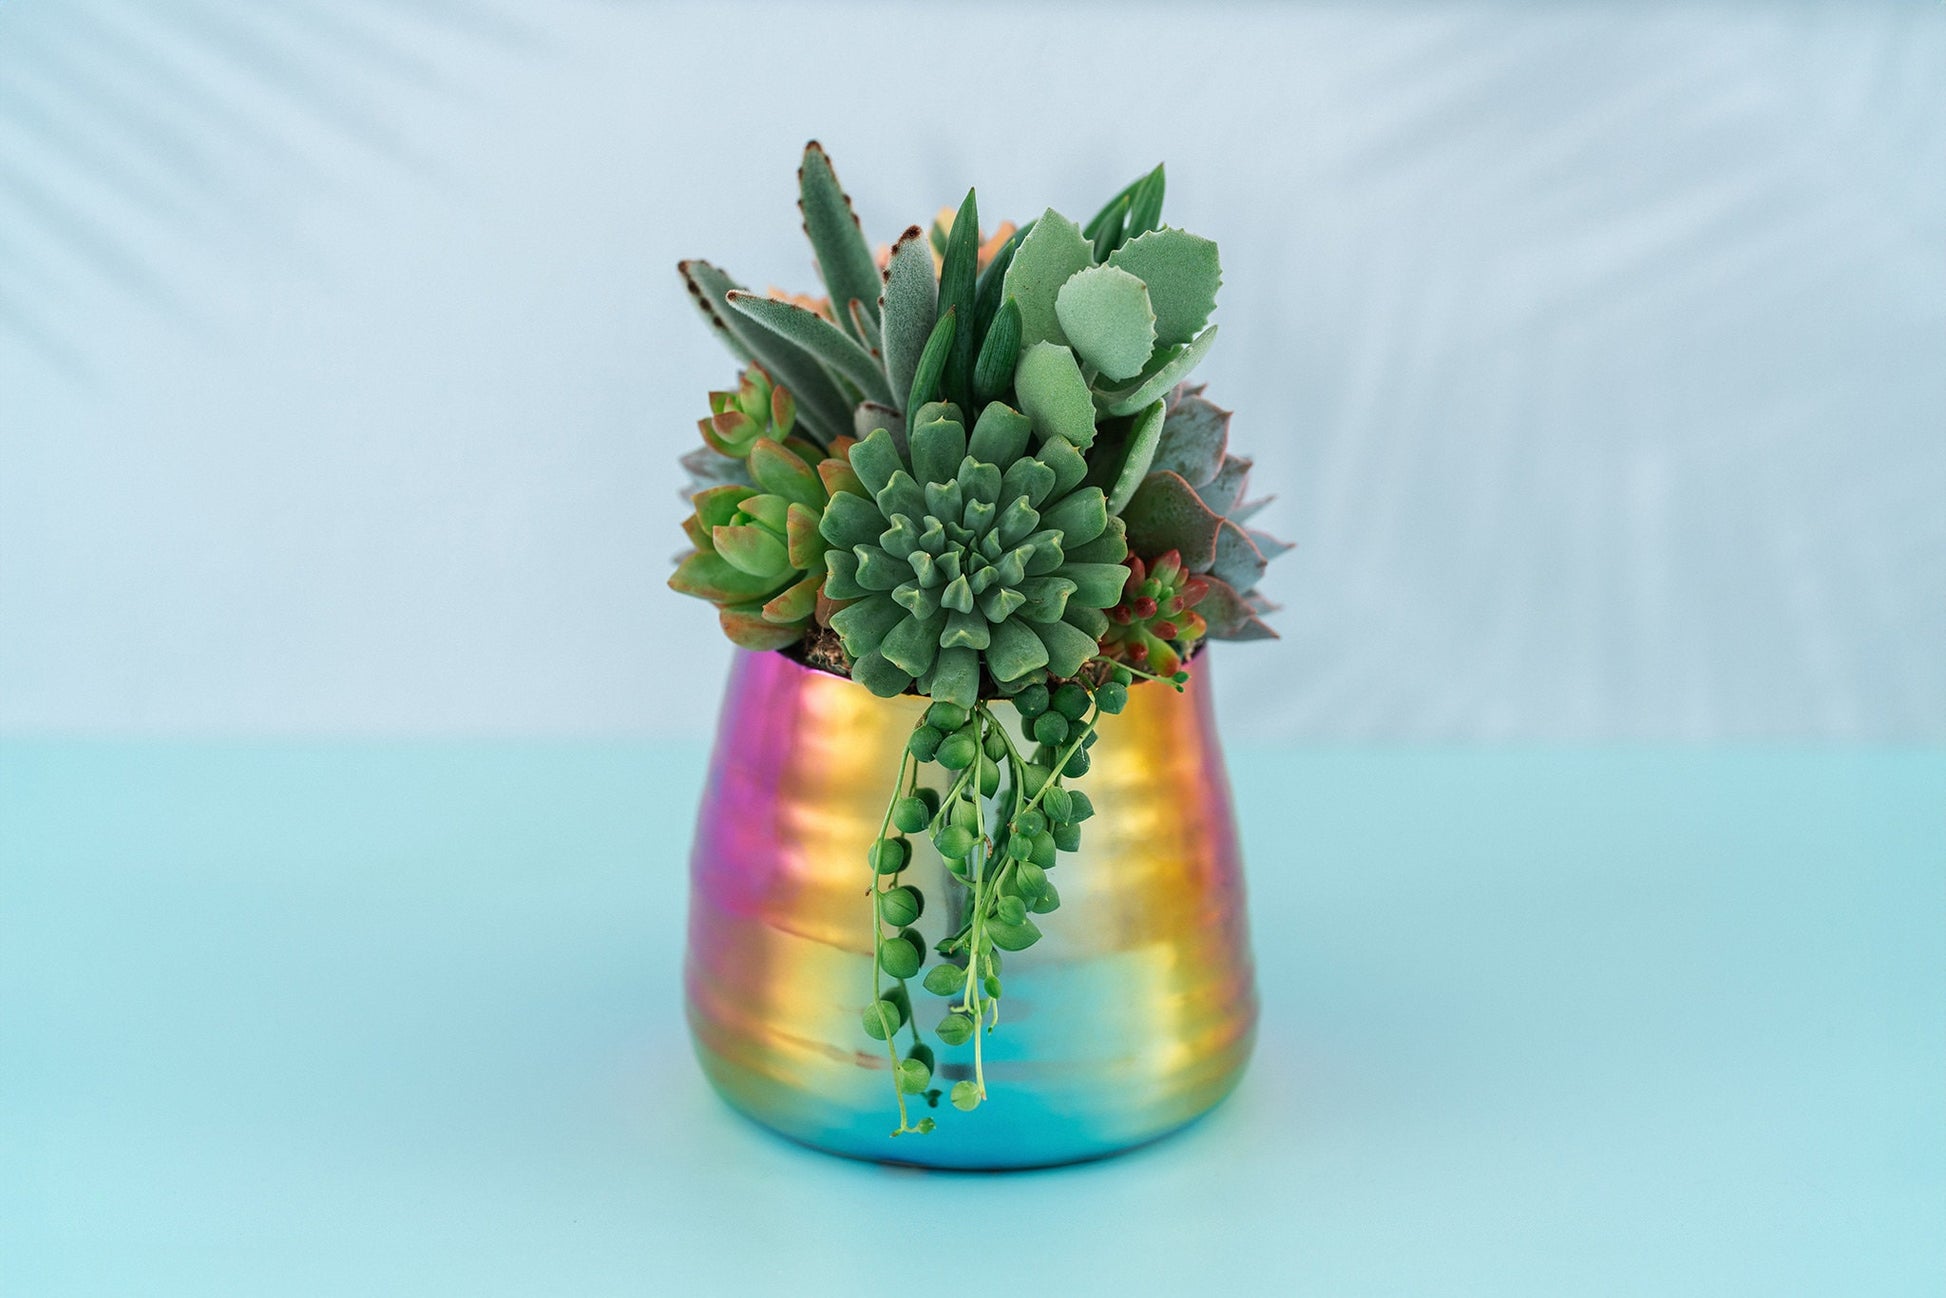 Iridescent Rainbow Succulent Arrangement Planter: Modern and Colorful Living Succulent Gift or Centerpiece